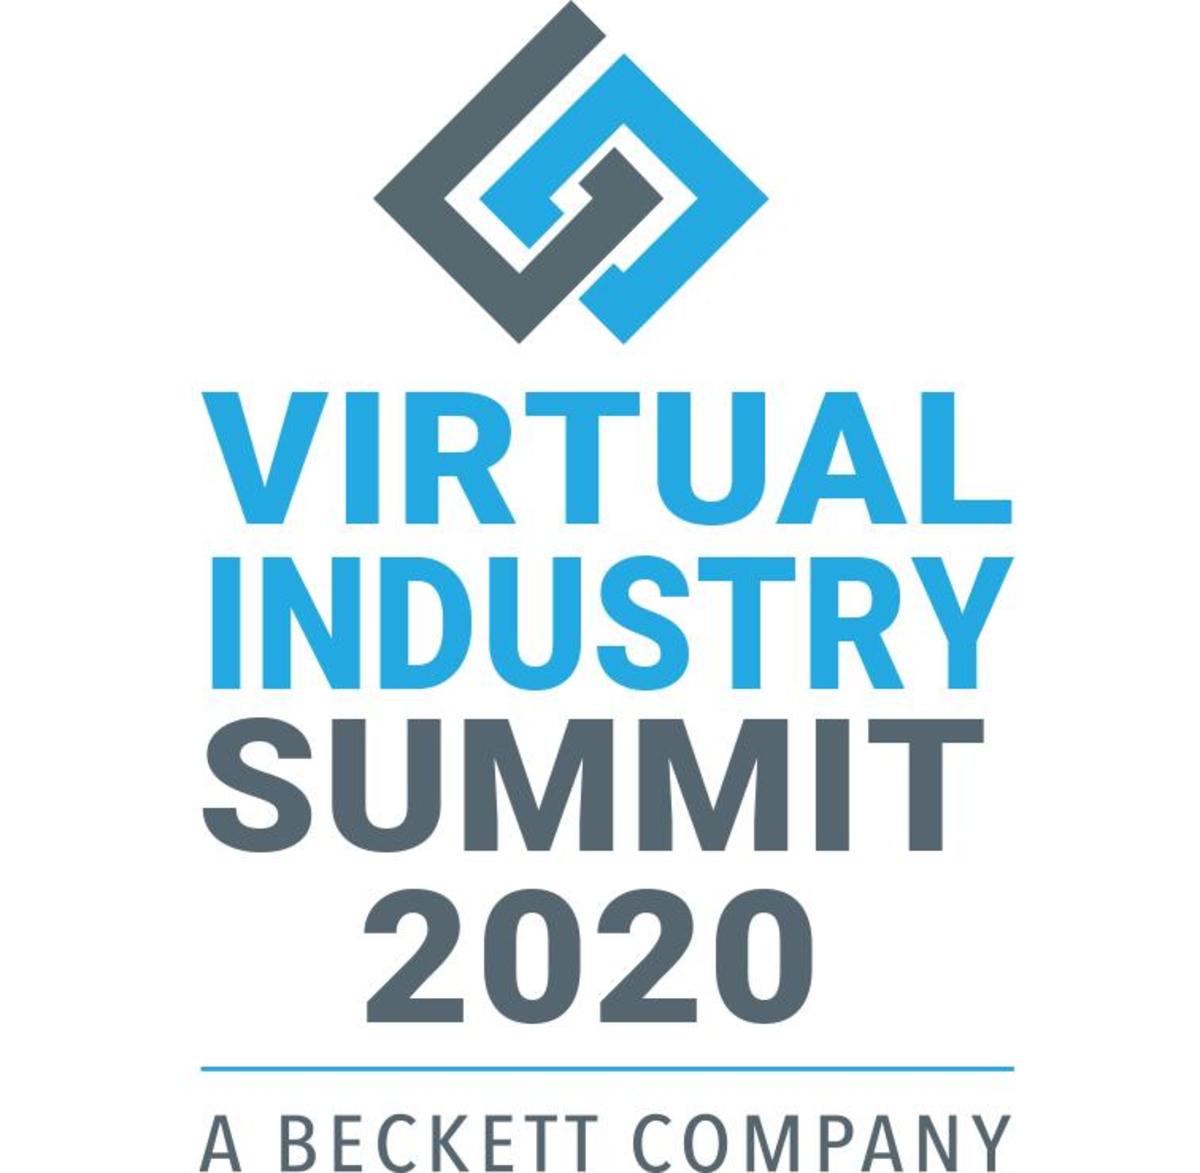 Virtual Industry Summit Logo final